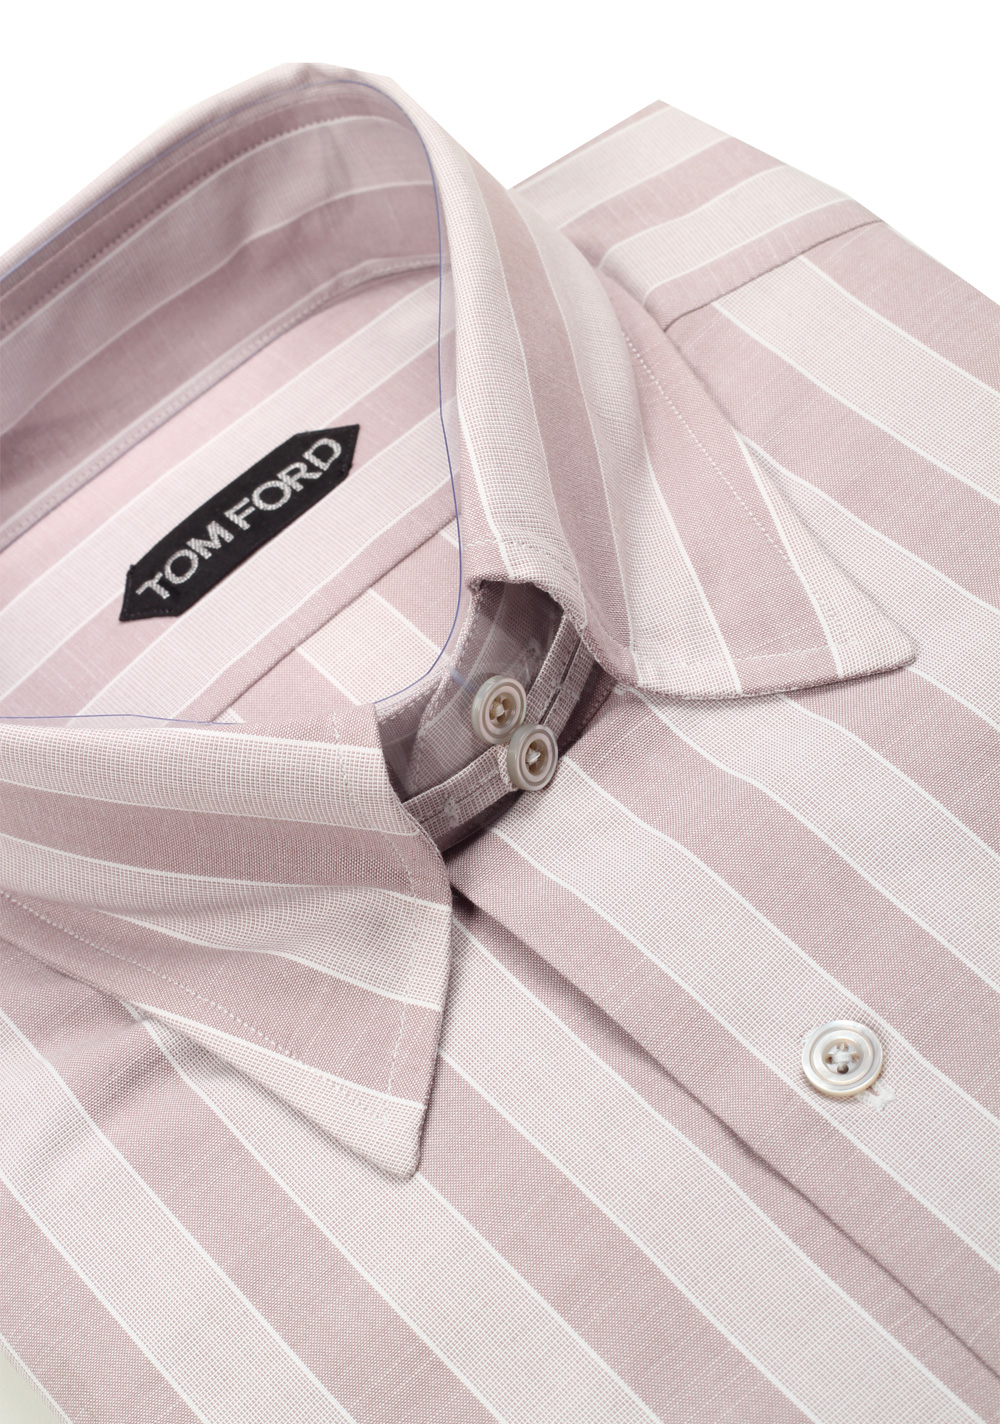 TOM FORD Striped Grayish Beige High Collar Dress Shirt Size 40 / 15,75 U.S. | Costume Limité